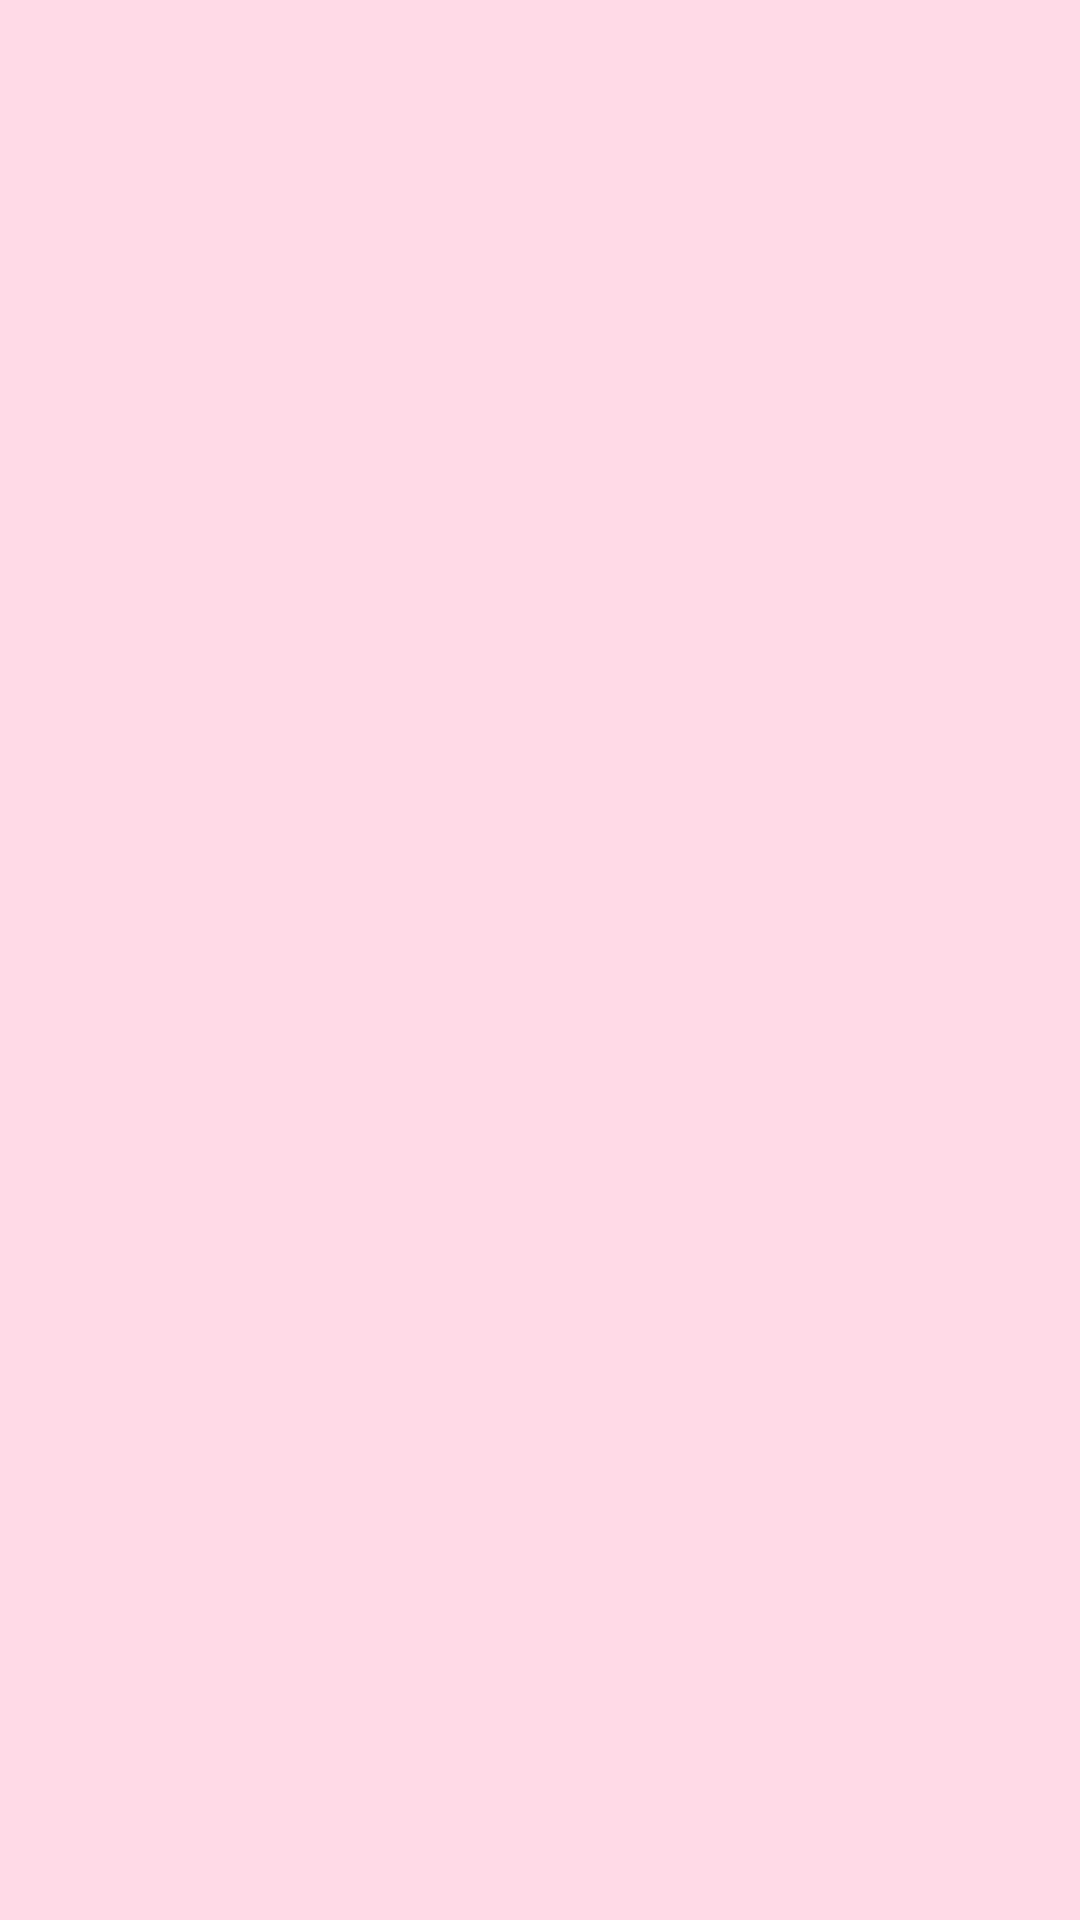 100+] Plain Pink Wallpapers